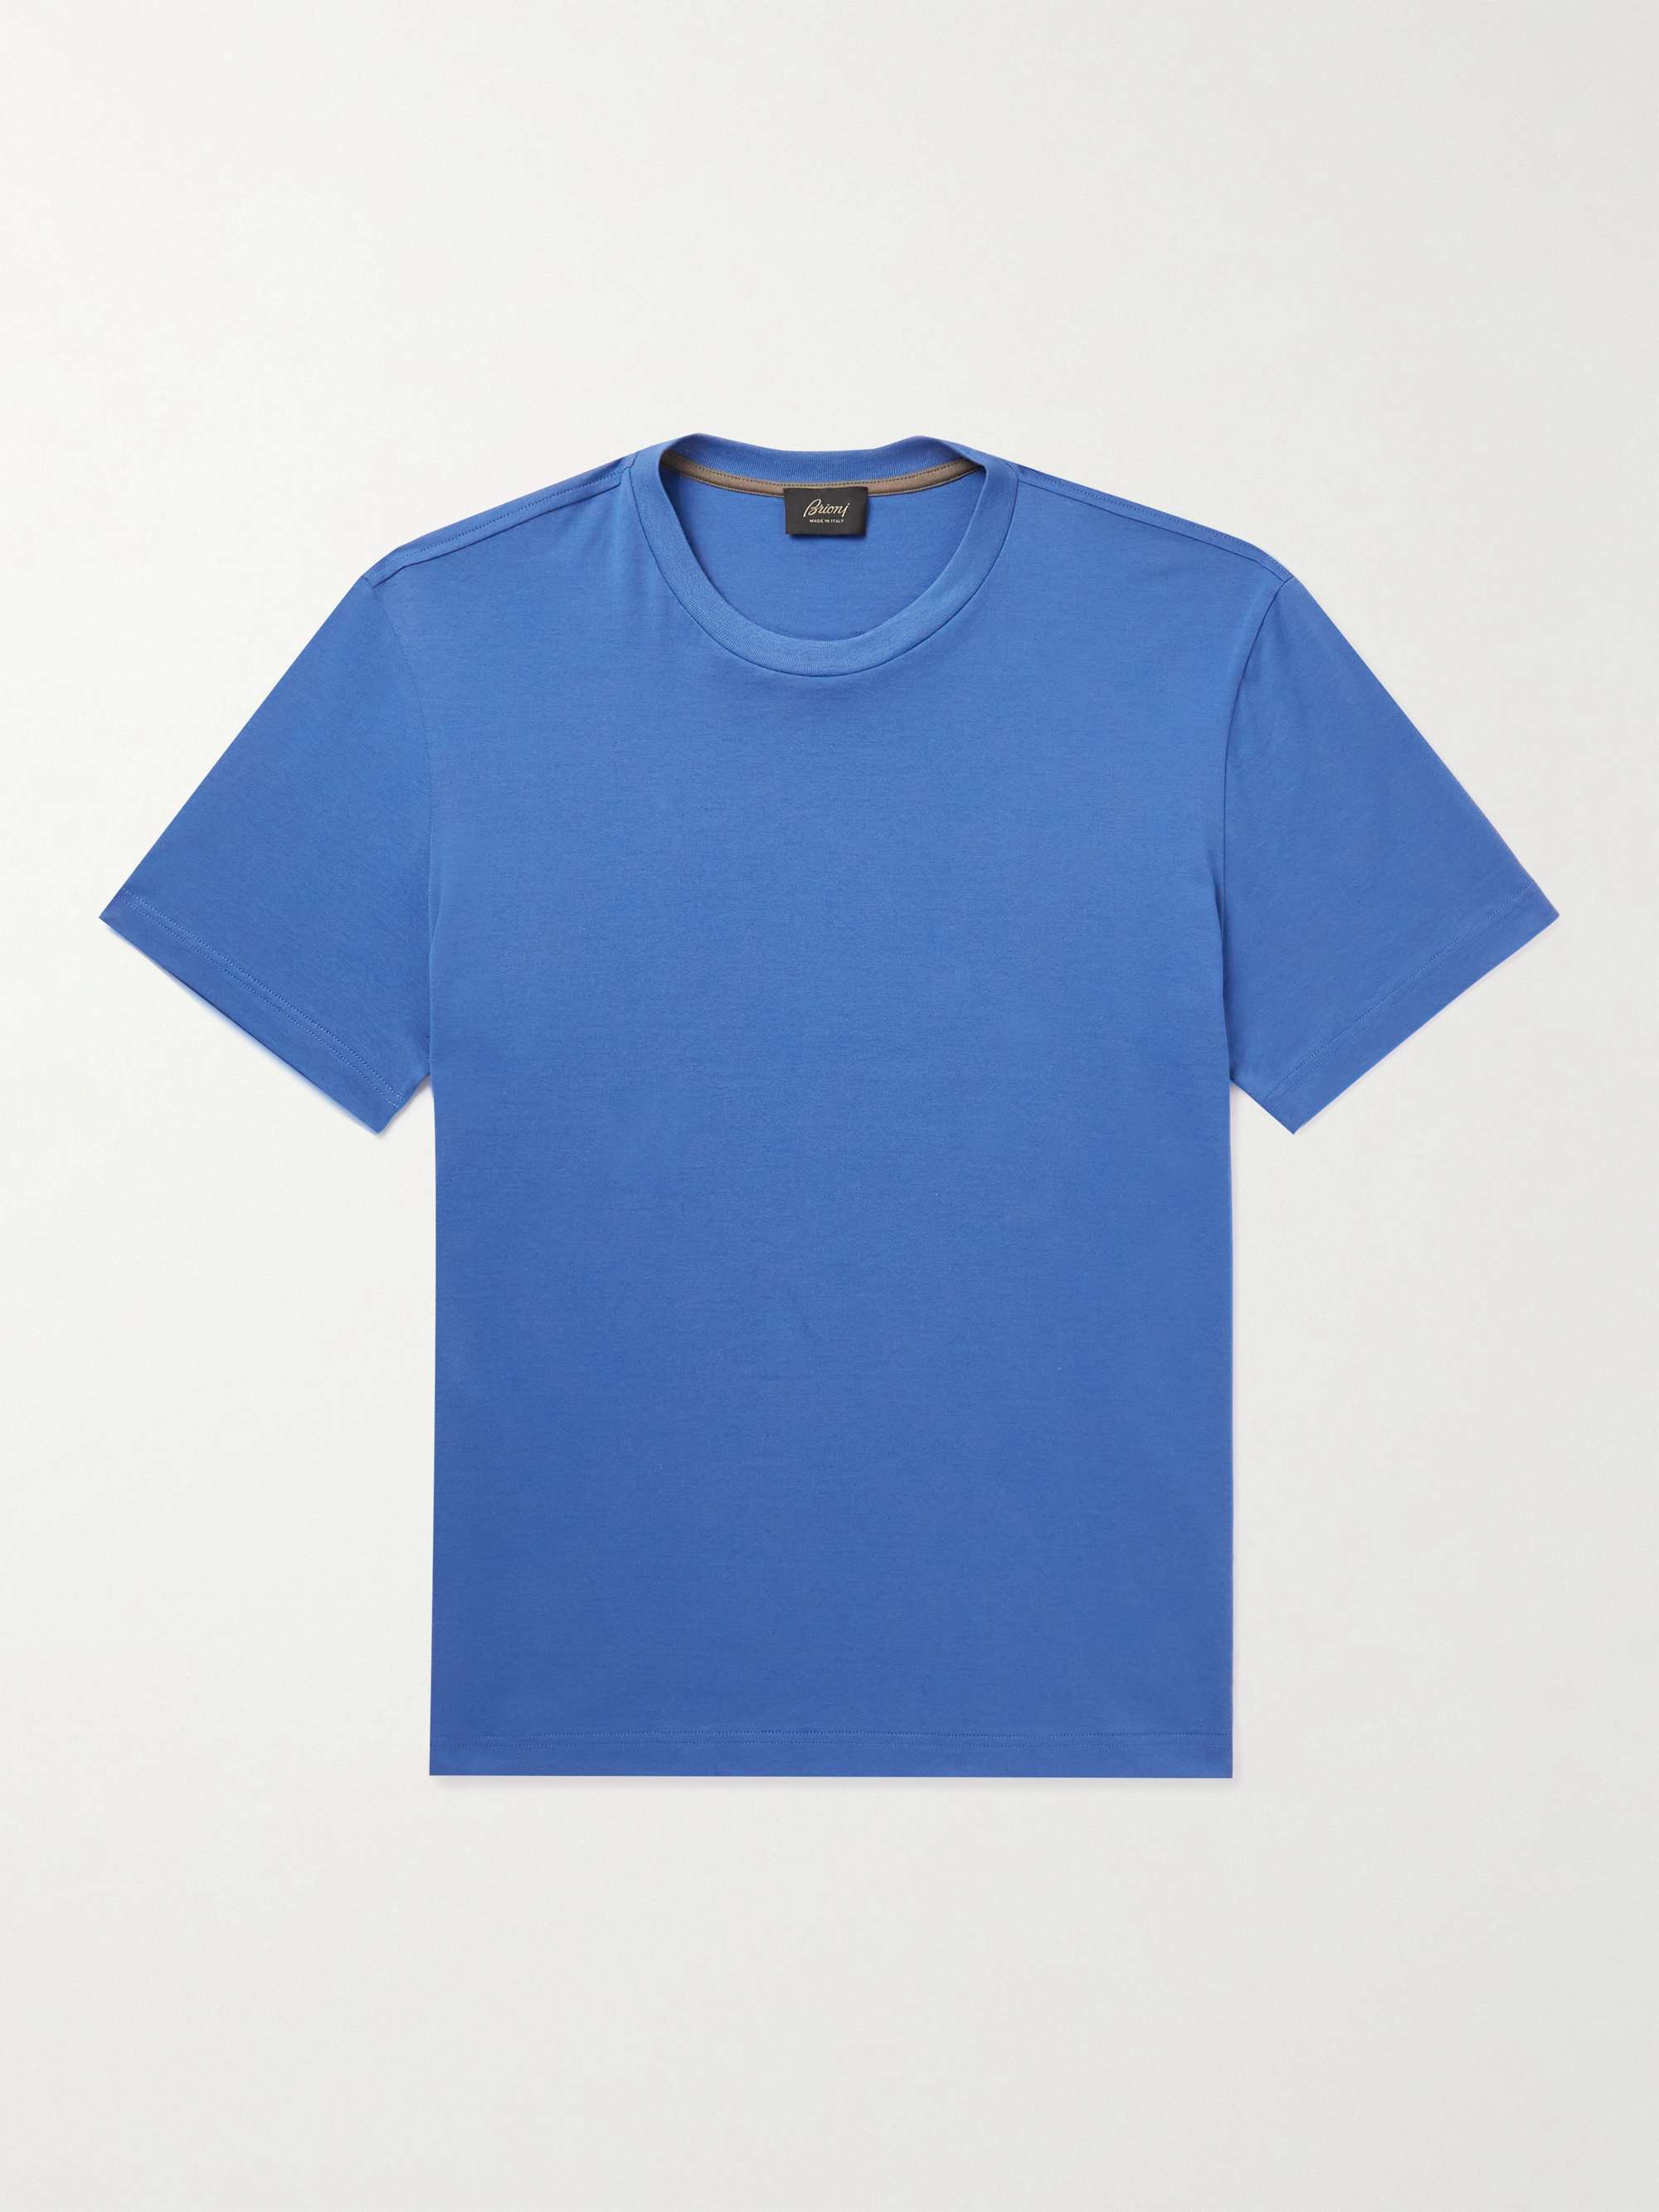 ACNE STUDIOS Elco Chain Cotton-Jersey T-Shirt for Men | MR PORTER